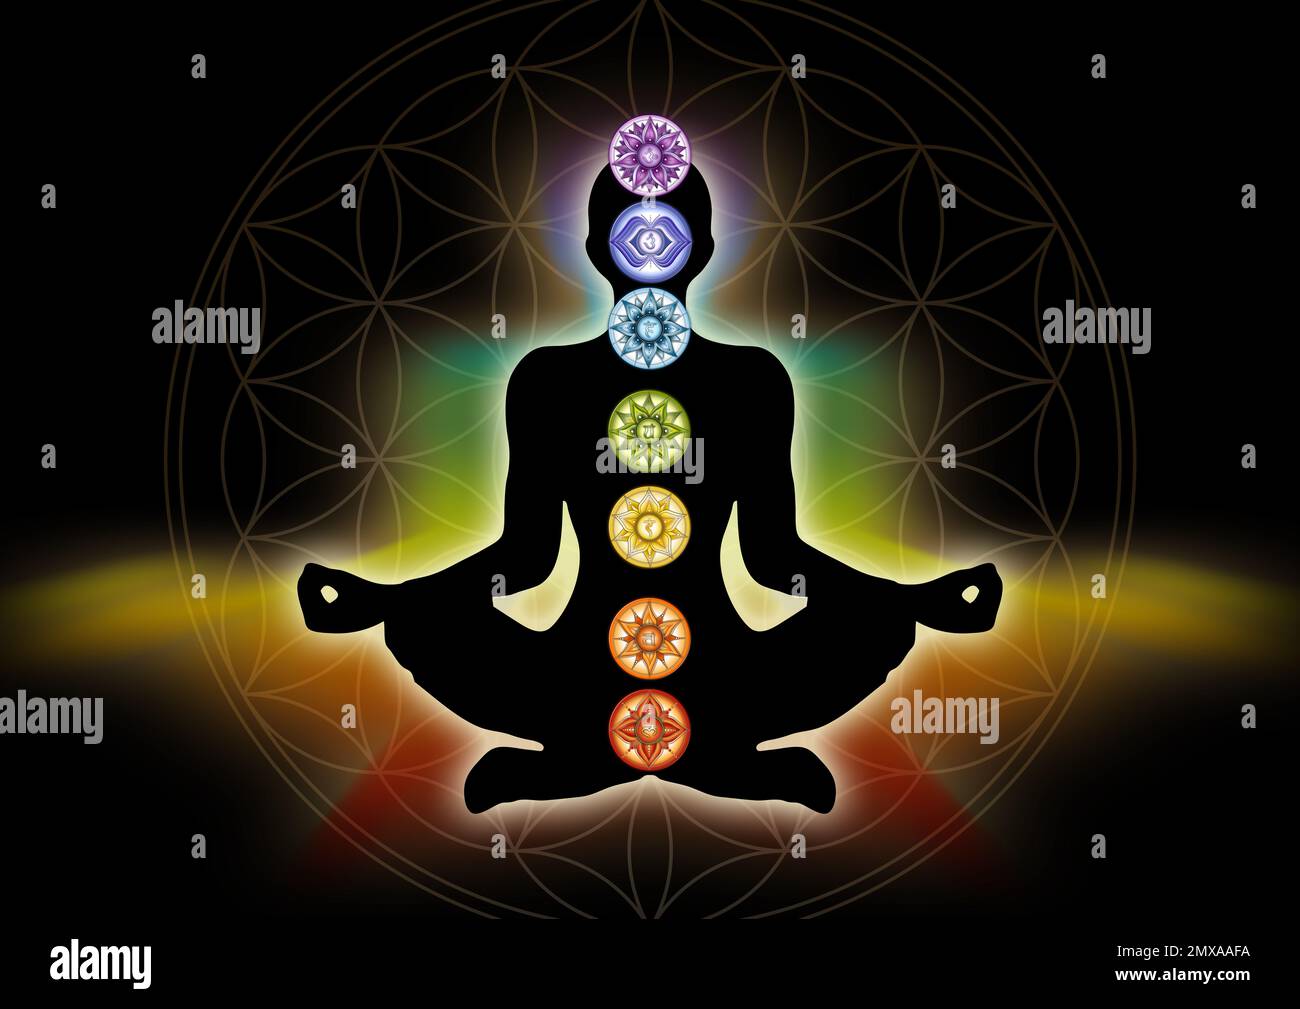 Human silhouette in yoga / lotus pose with 7 Chakras and Flower of Life. (Human energy body, aura, yoga lotus pose). Stock Photo